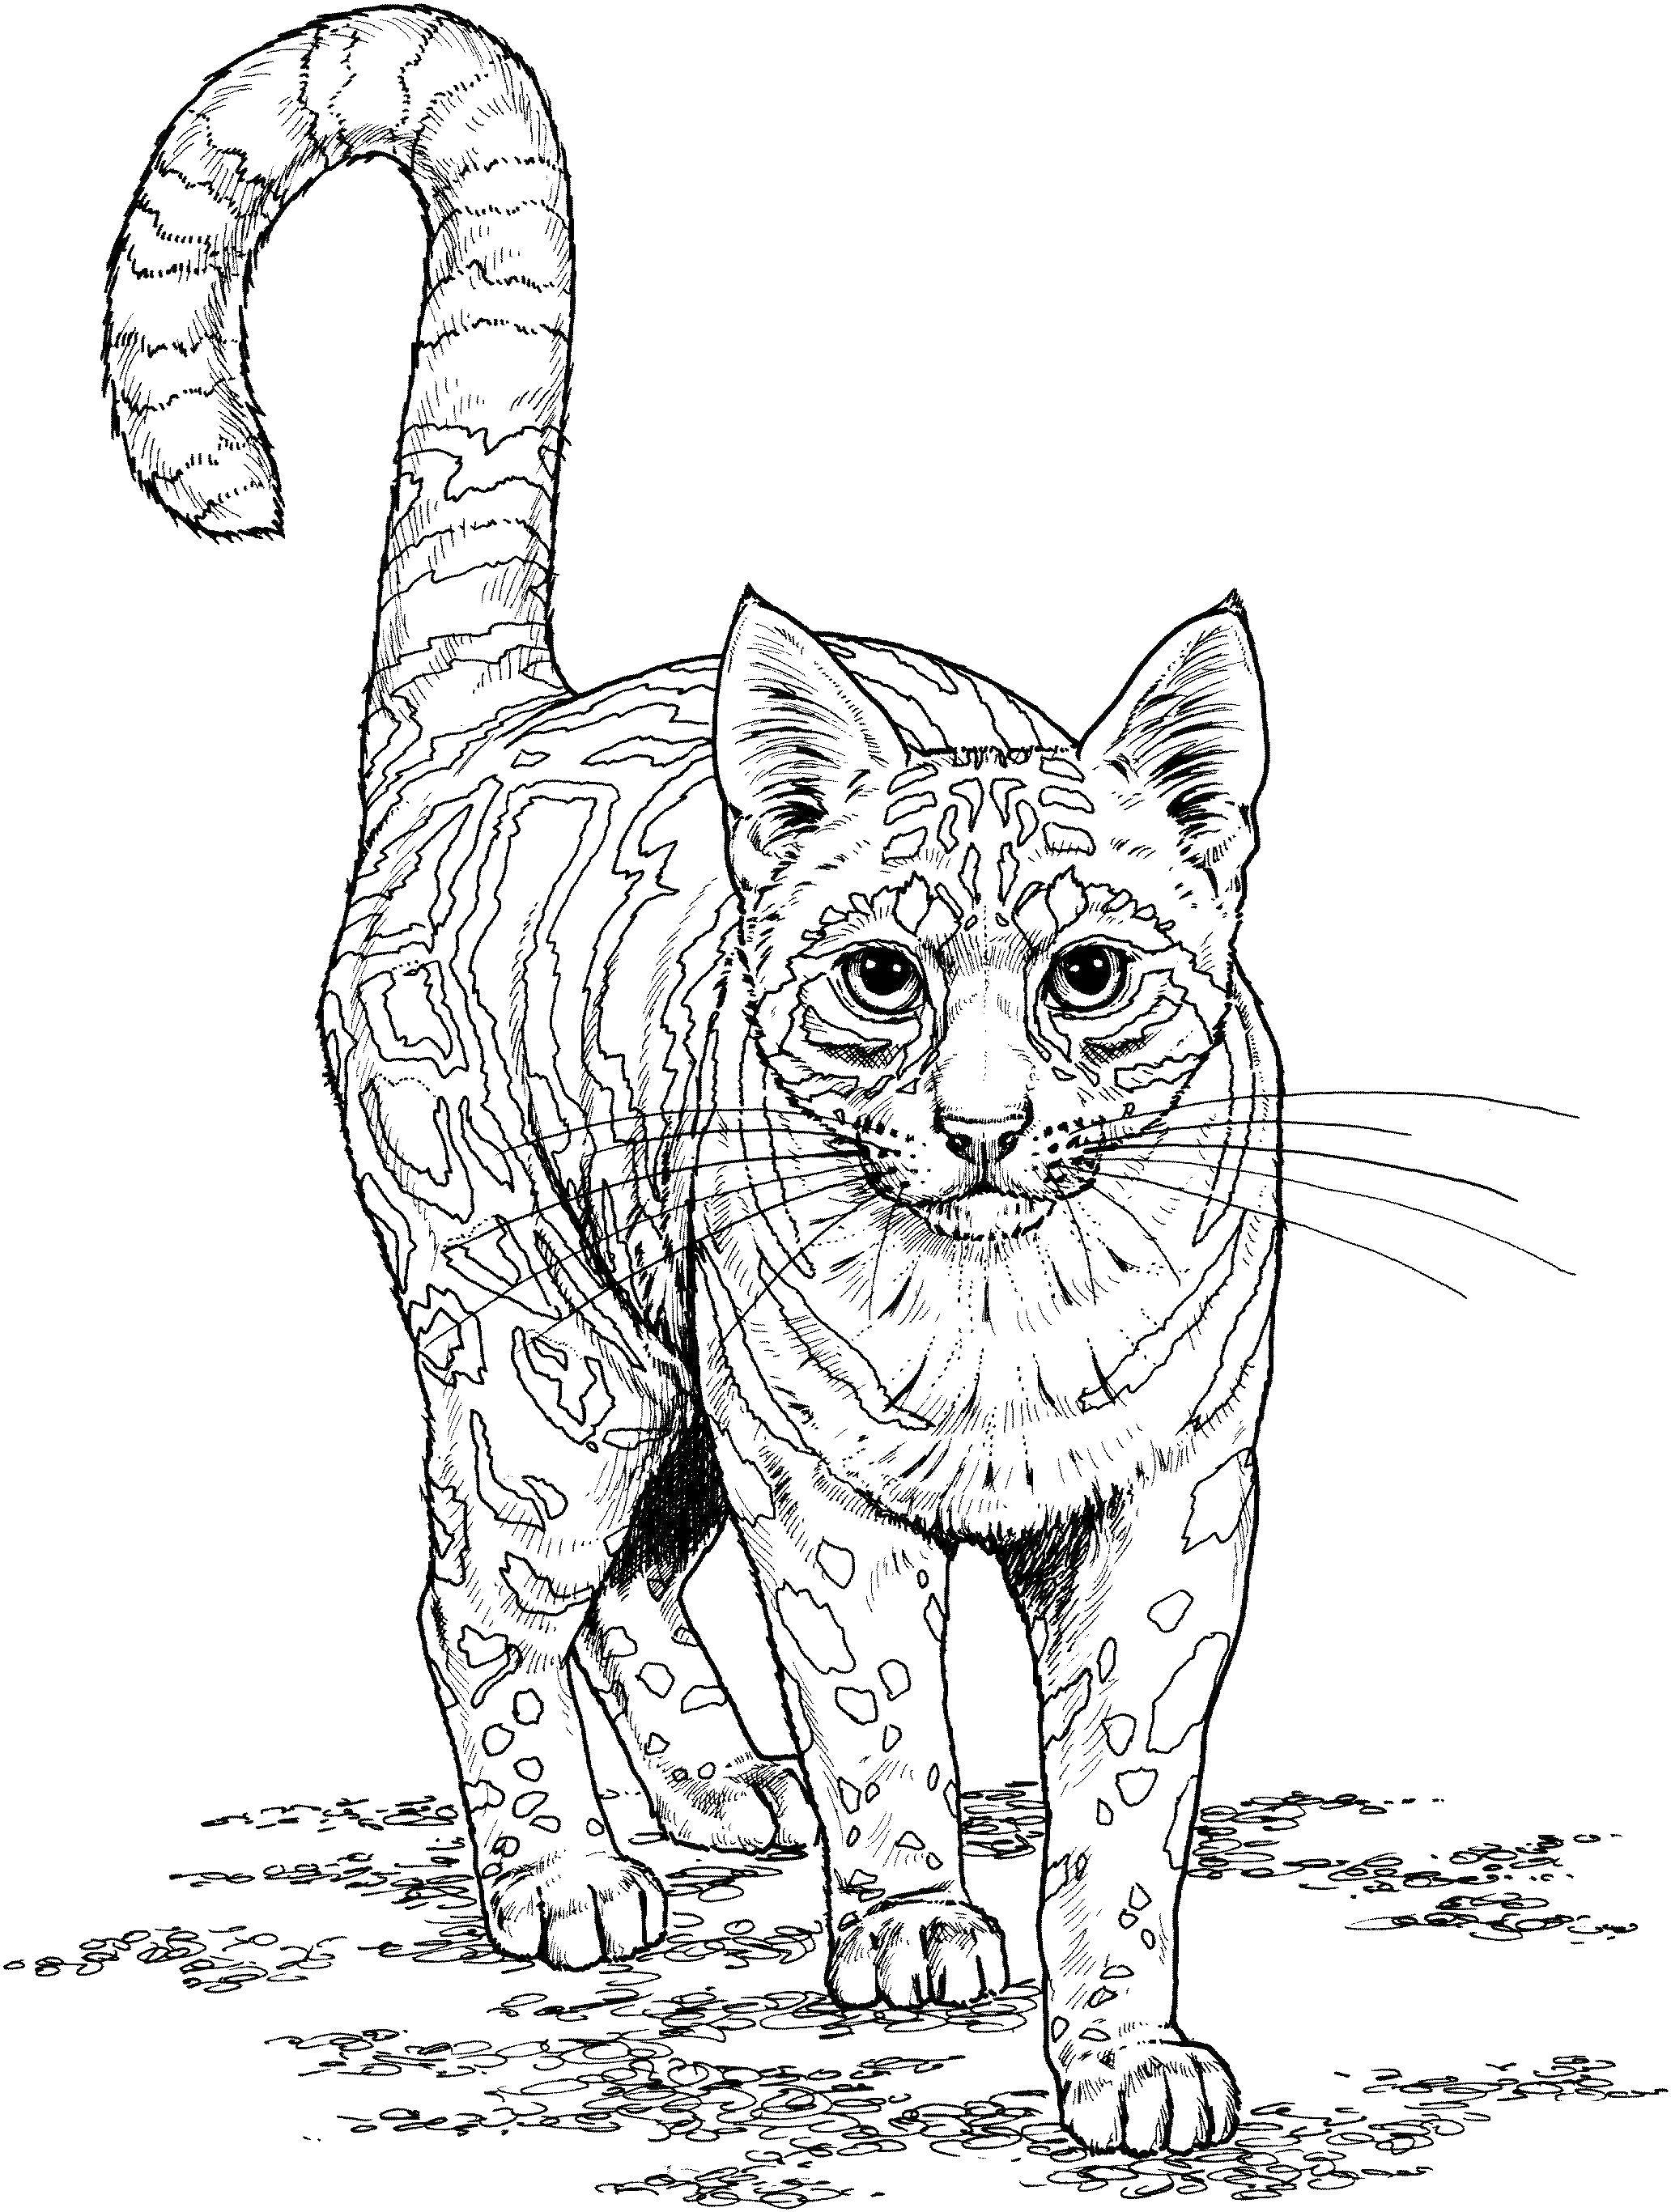 Название: Раскраска Крупная пятнистая кошка. Категория: раскраски антистресс. Теги: кошка, дикая.